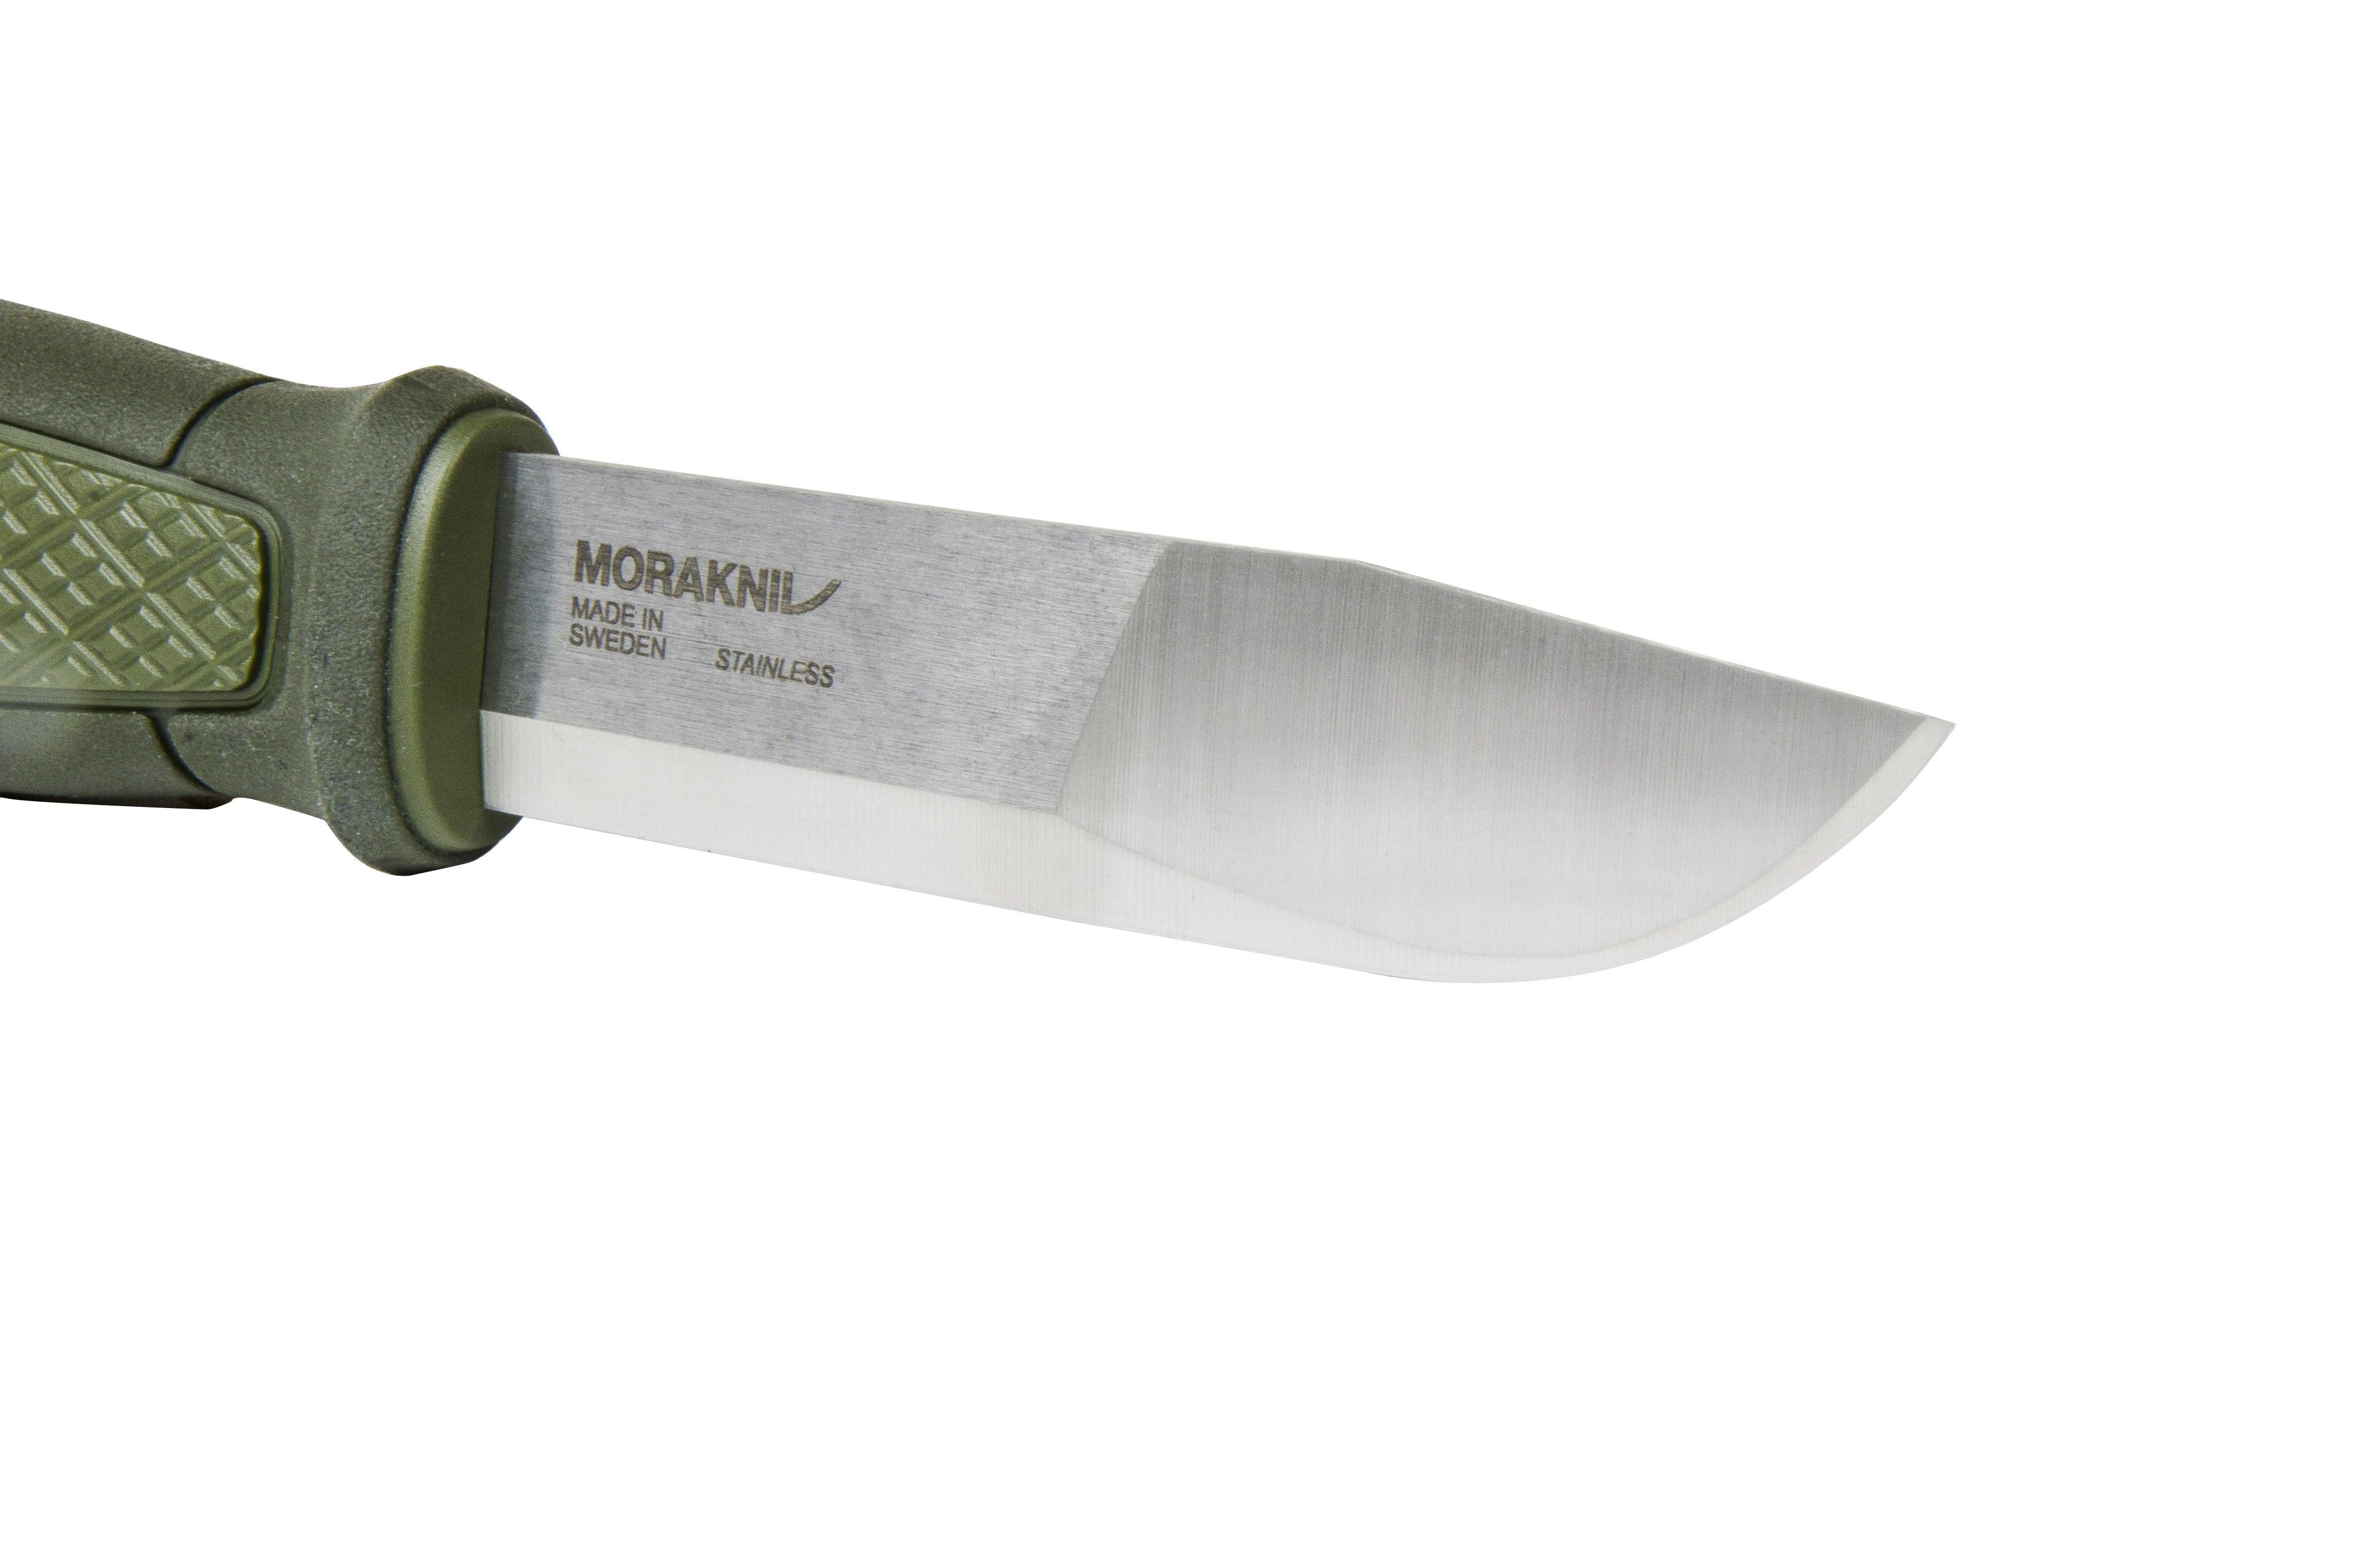 Morakniv�� Kansbol Stainless Knife with Plastic Sheath - Trusted Gear Company LLC